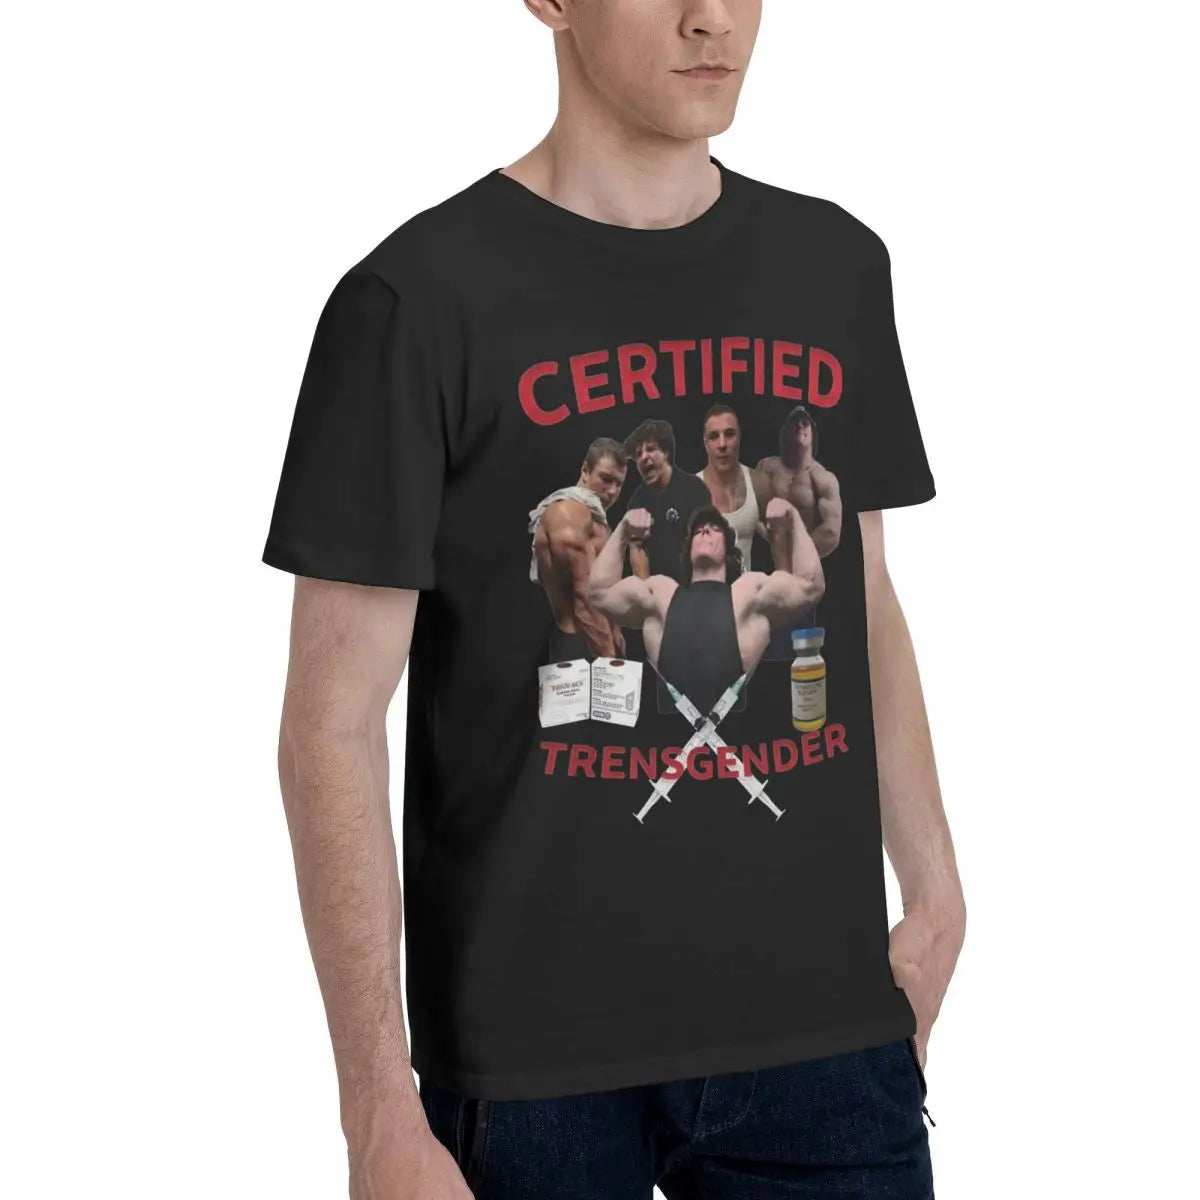 "Sam Sulek & Tren Twins" T-Shirt "CERTIFIED TRENSGENDER